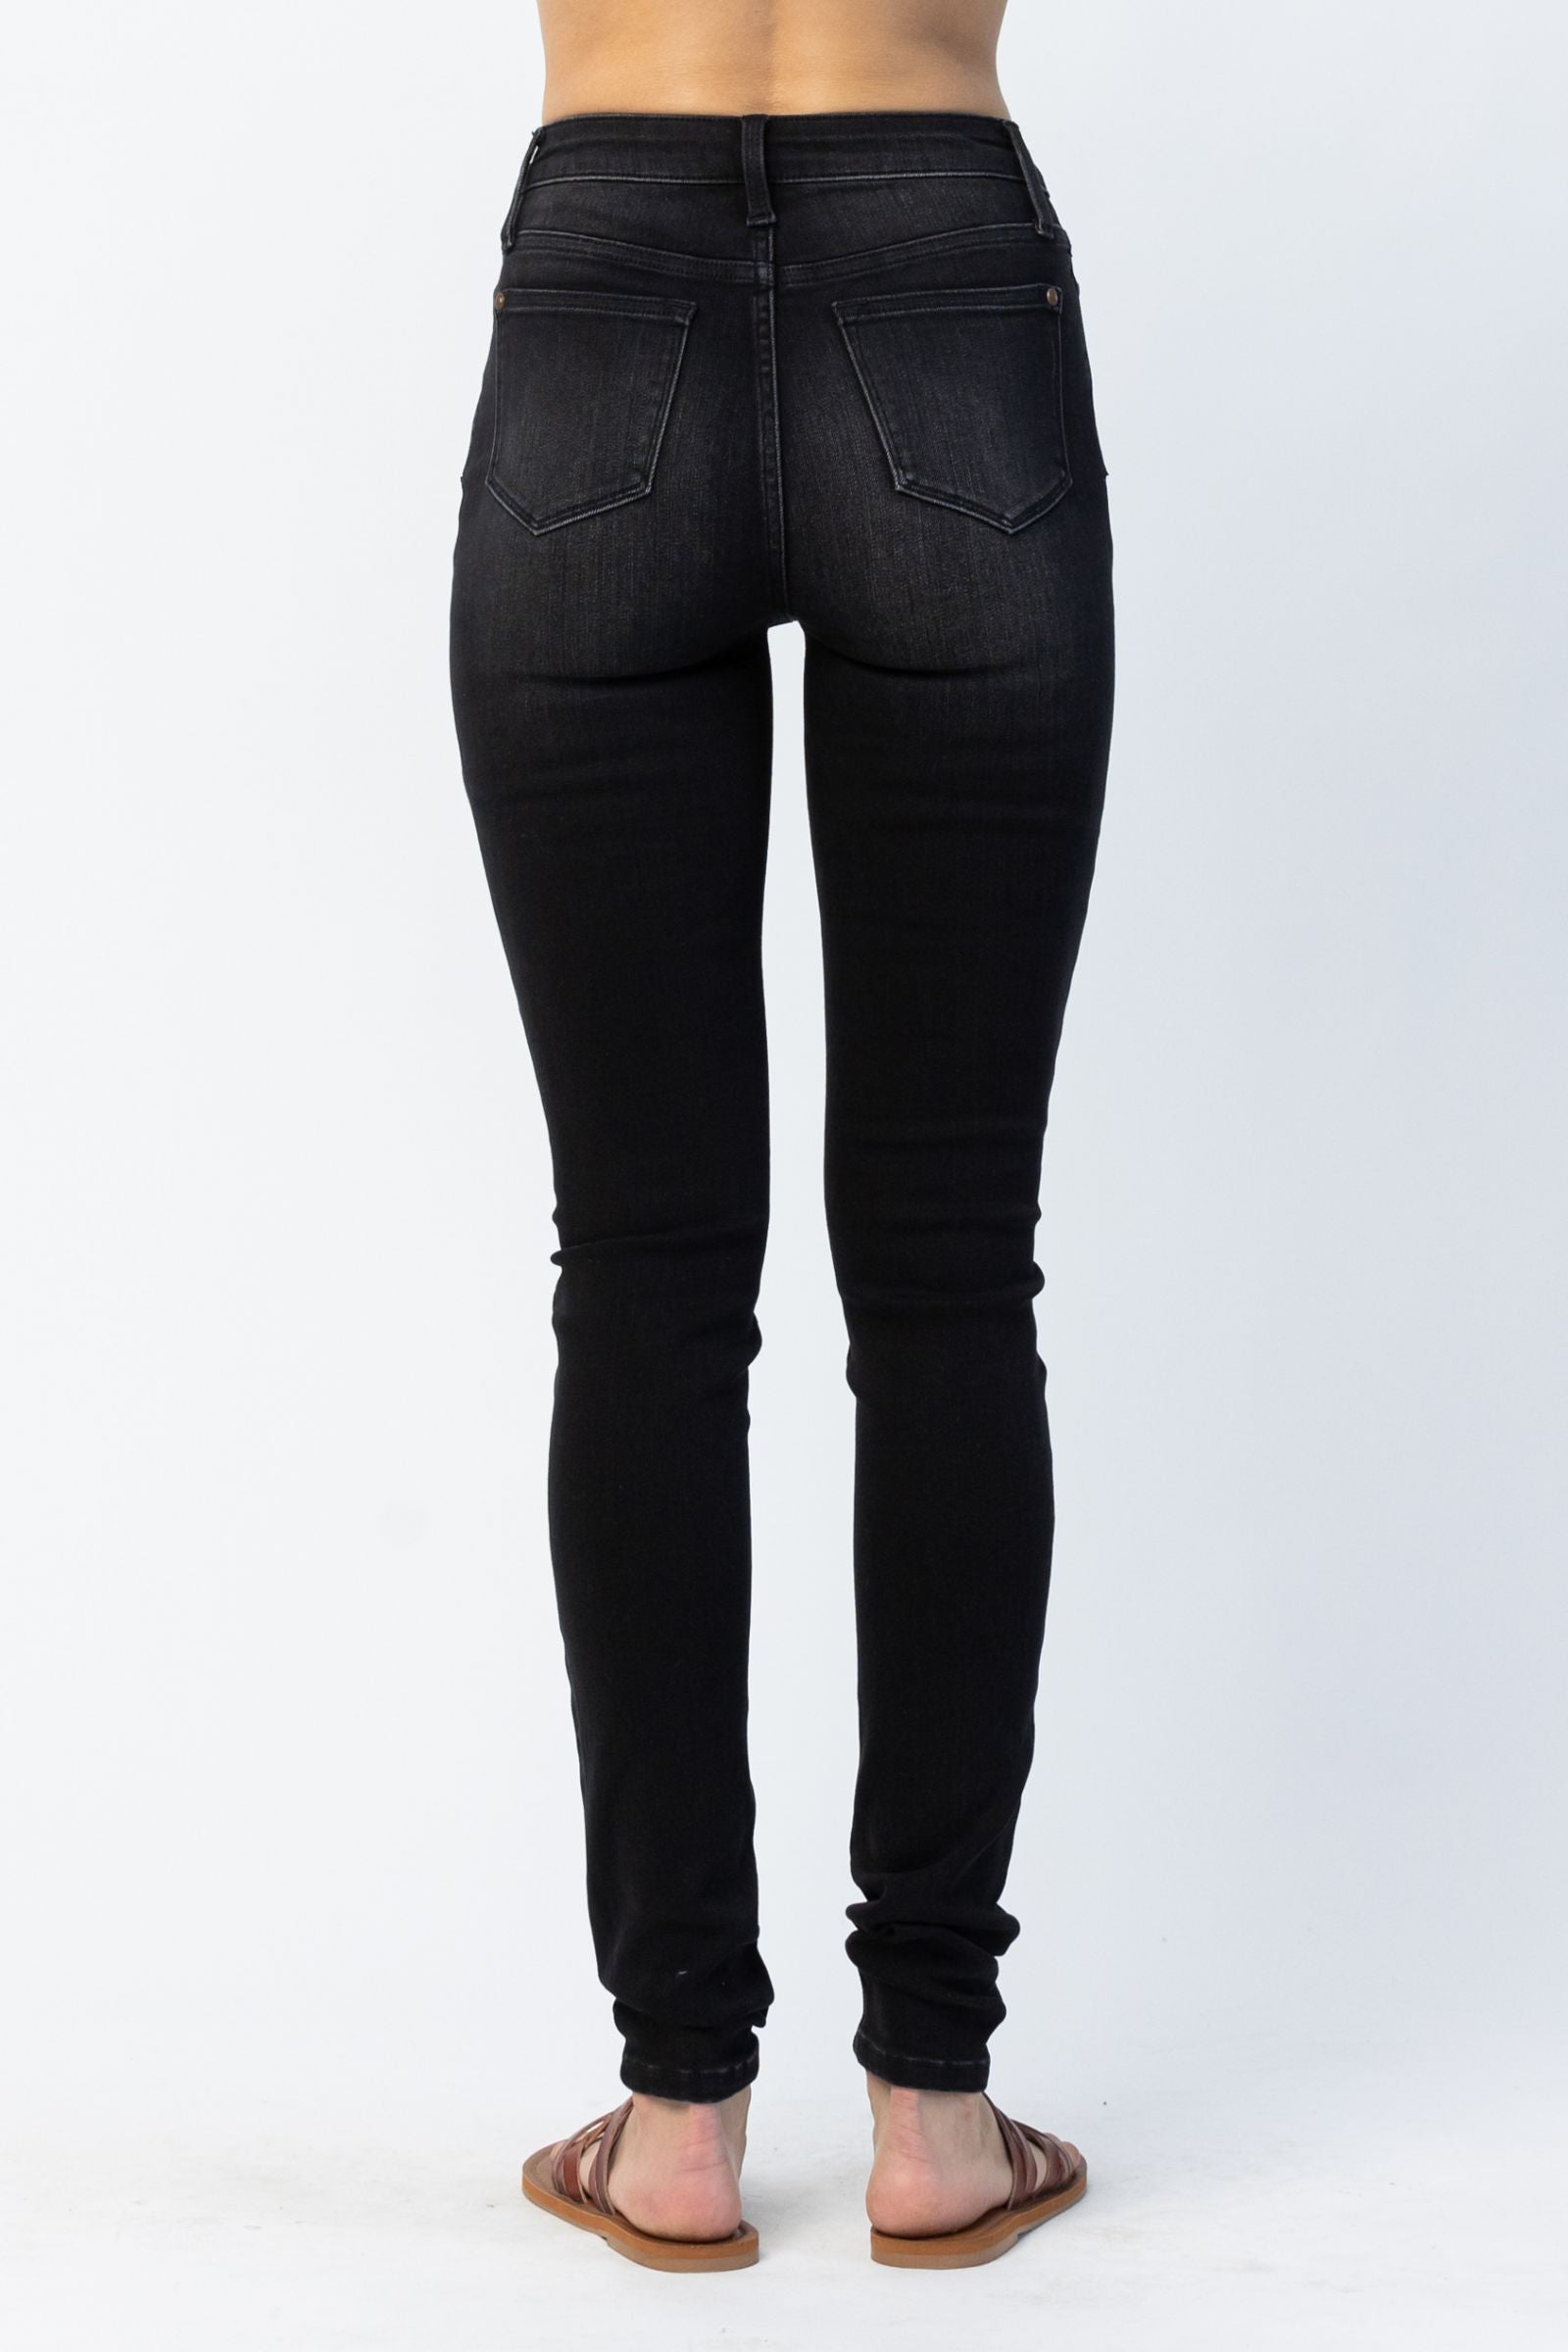 Viper Black Judy Blue Skinny Jeans Long Inseam